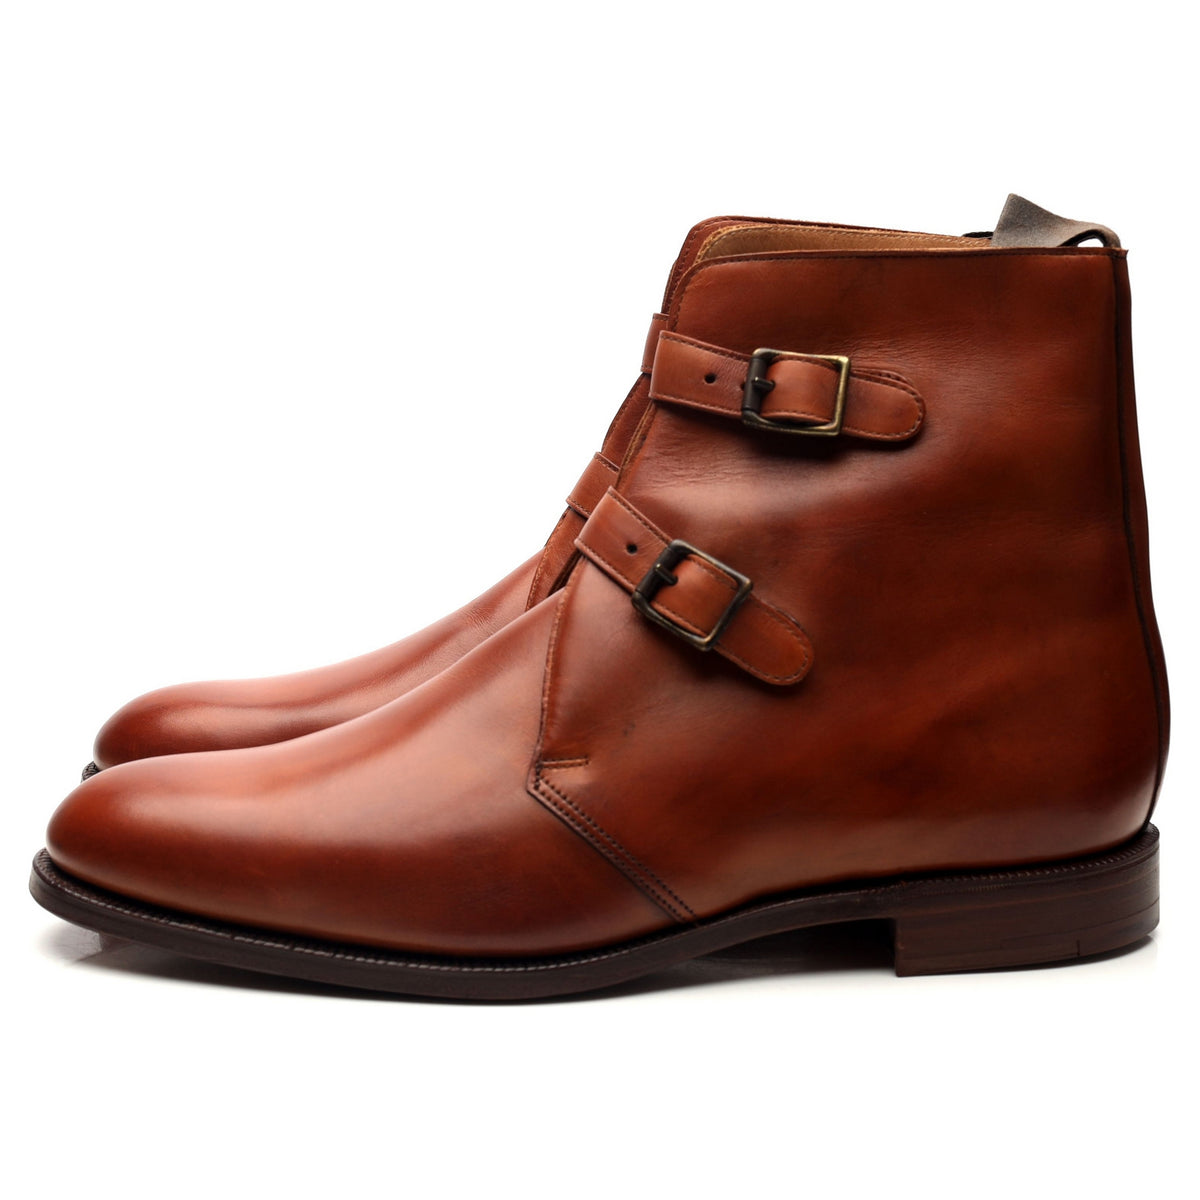 Manfield Tan Brown Boots Double Monk Strap UK 11 E